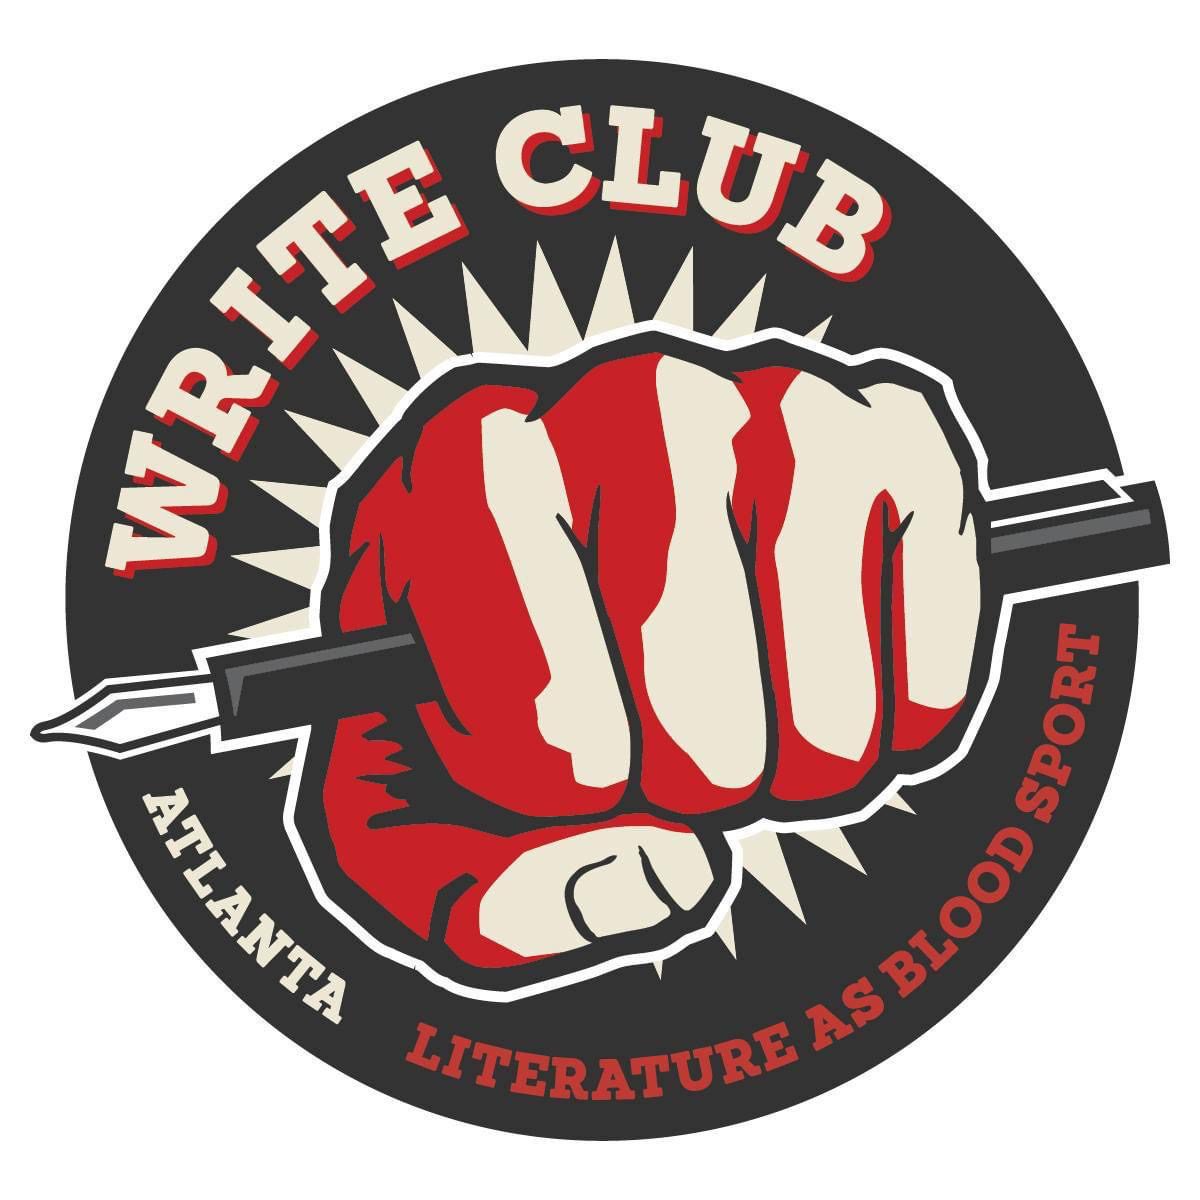 Write Club Atlanta. Literature as Blood Sport.